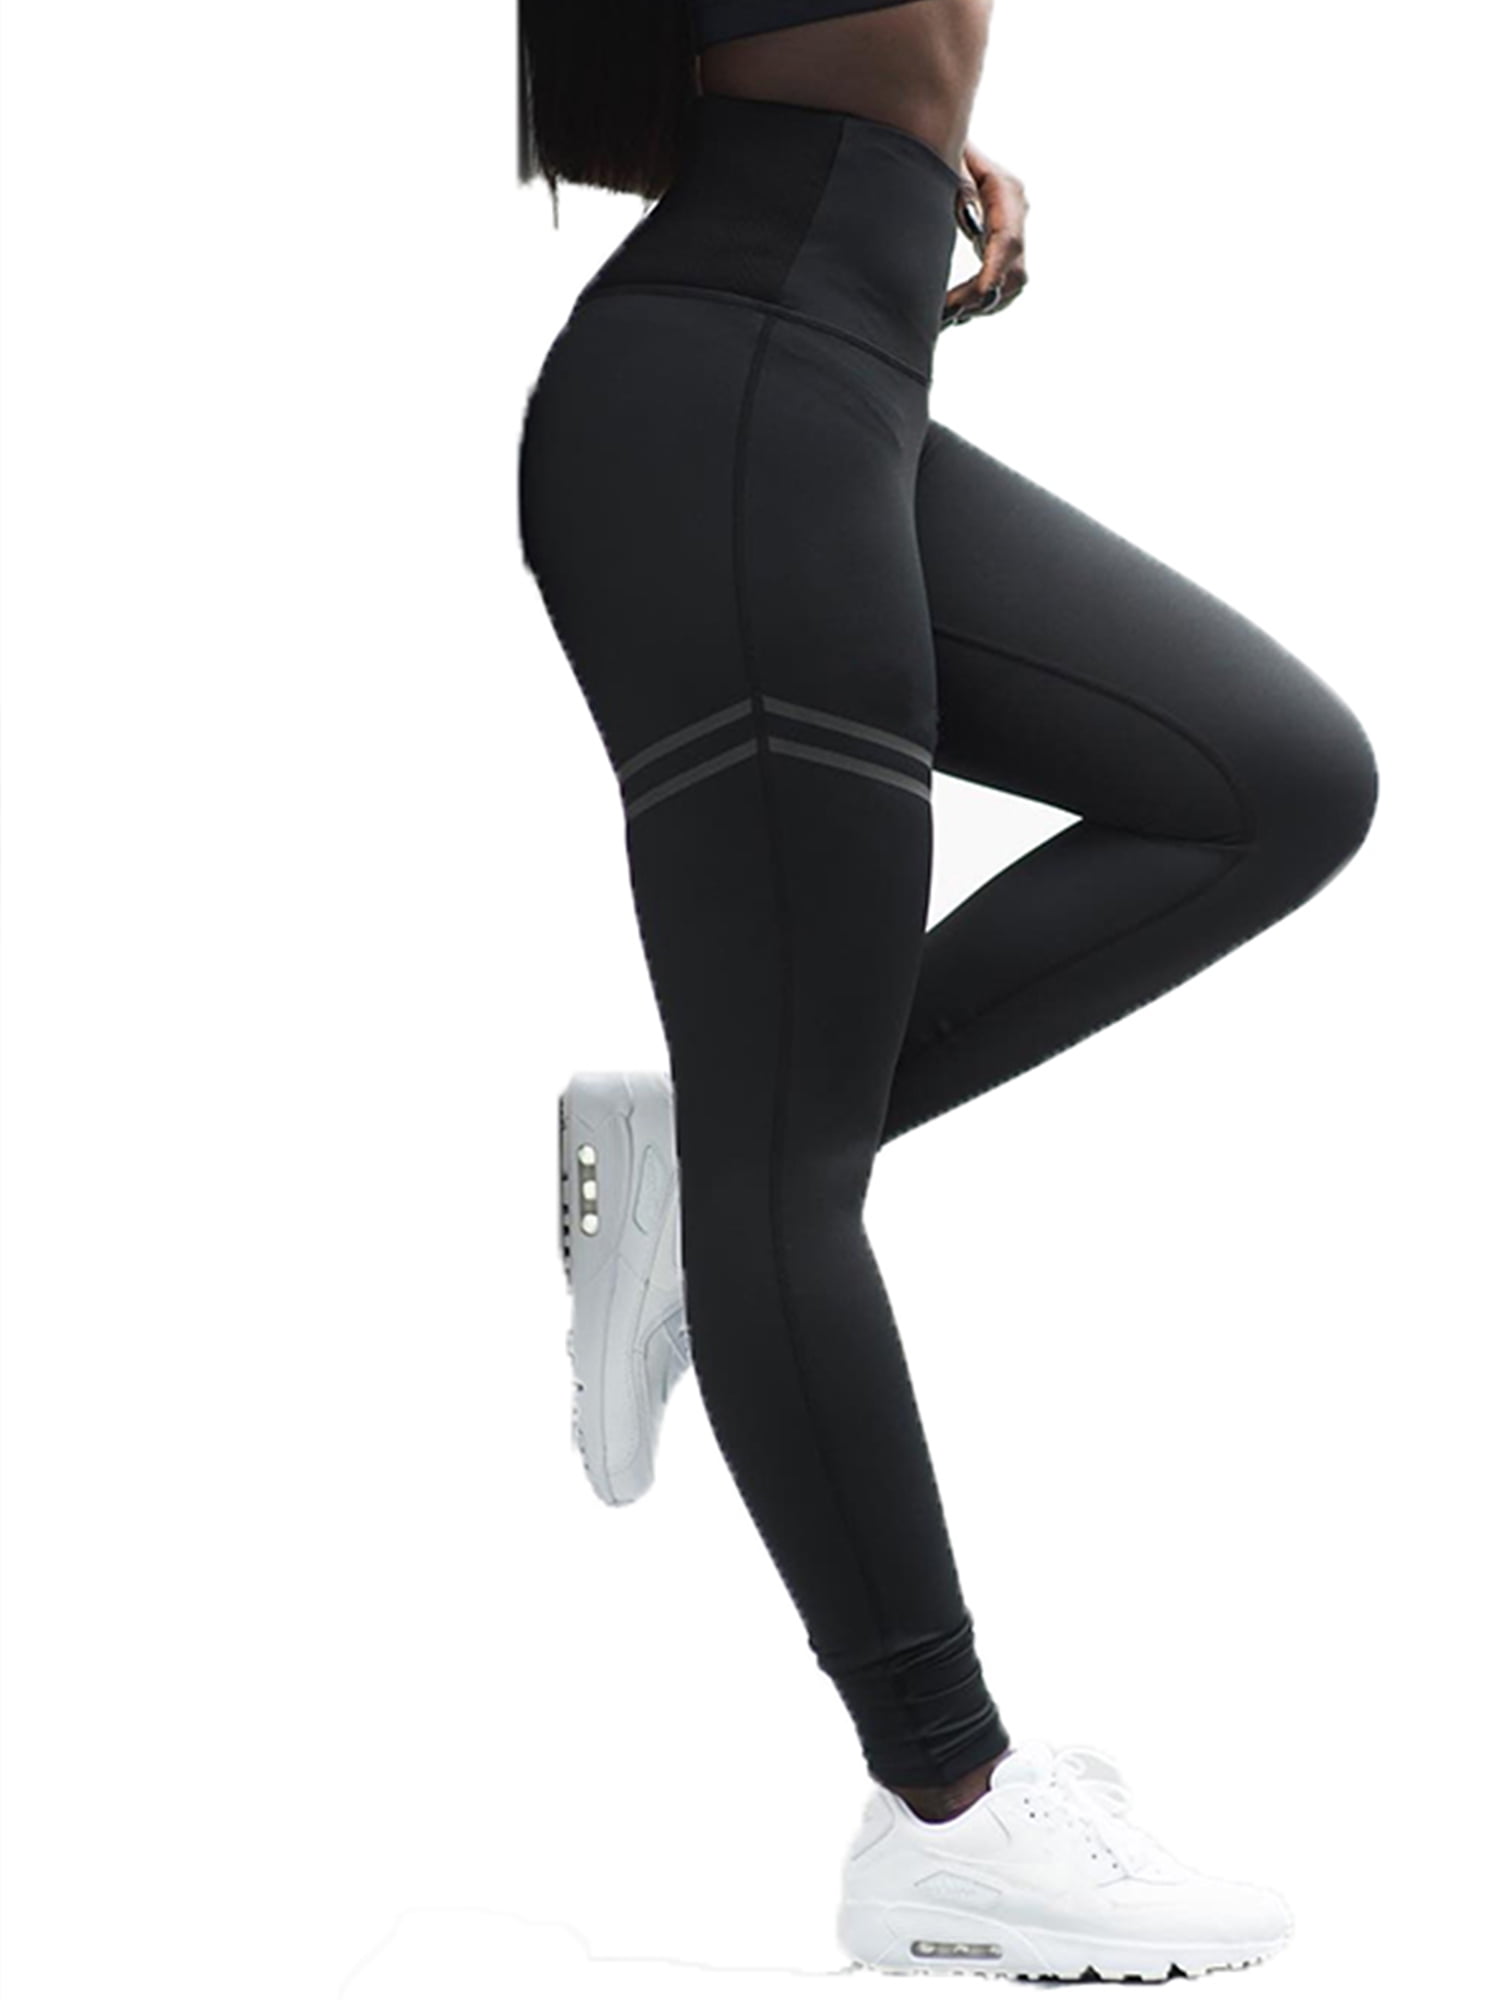 Women Yoga Pants☃Foncircle Workout Leggings Fitness Sports Gym Athletic Pants 